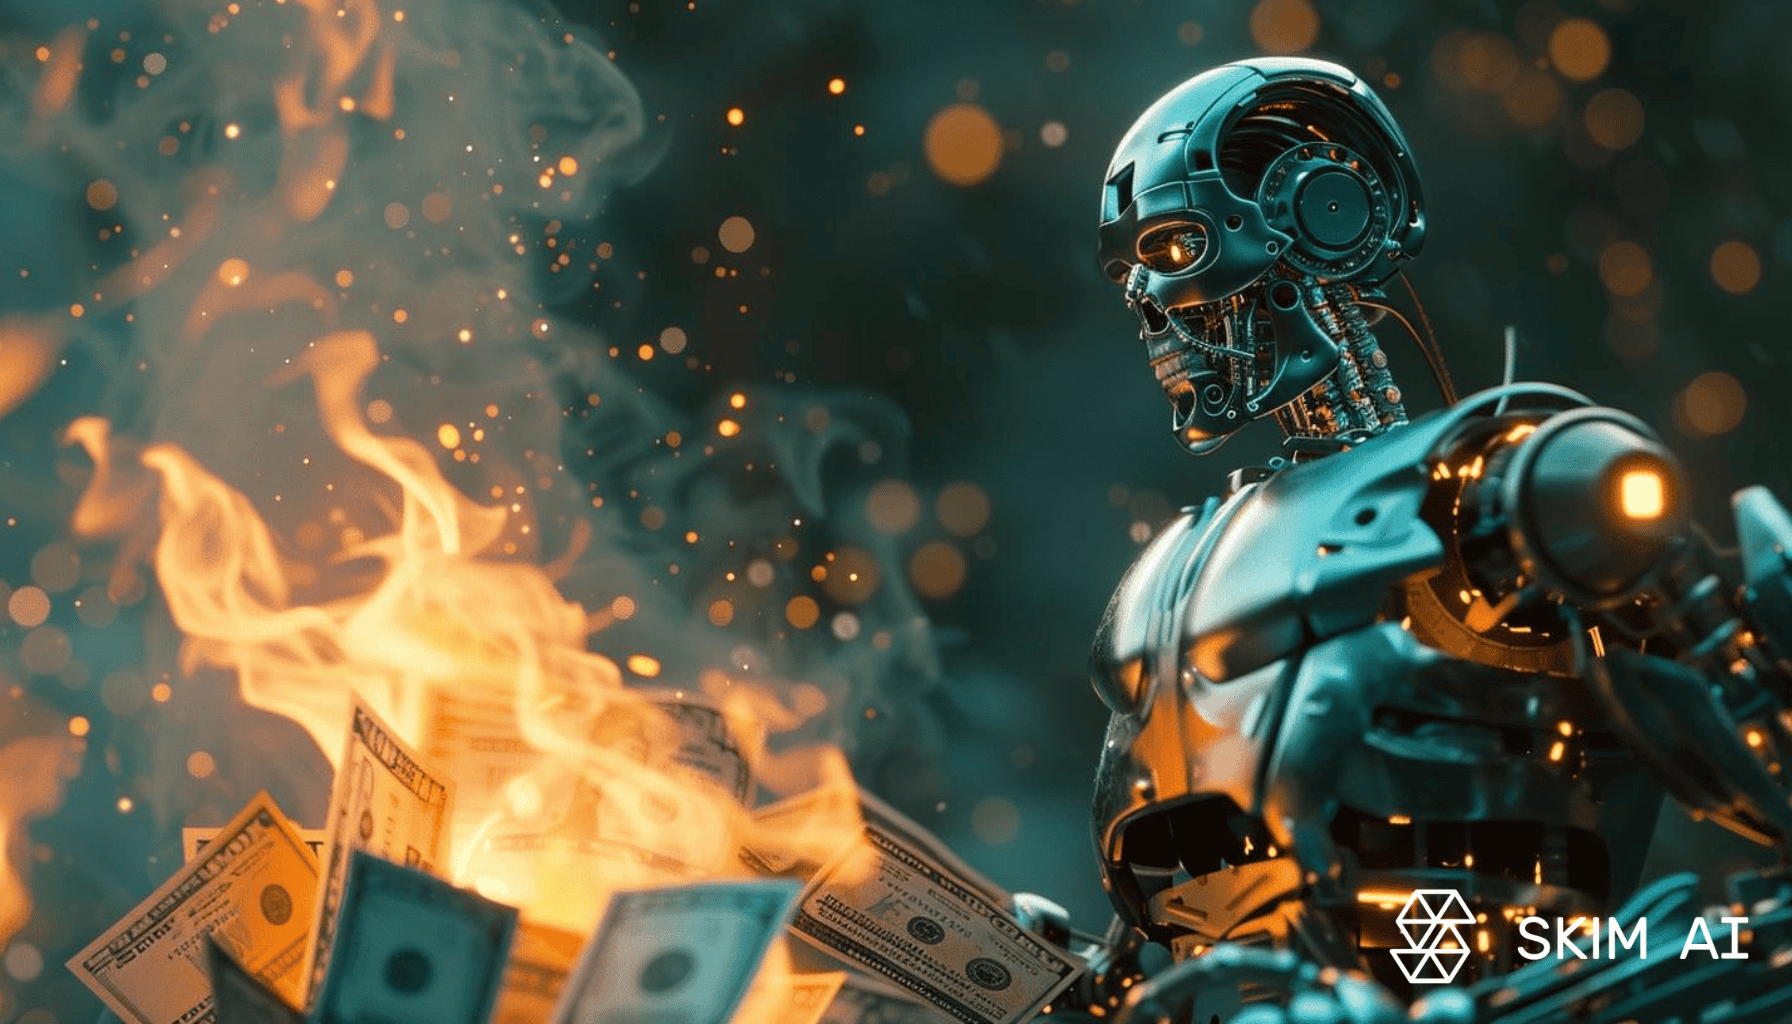 Robot burning money